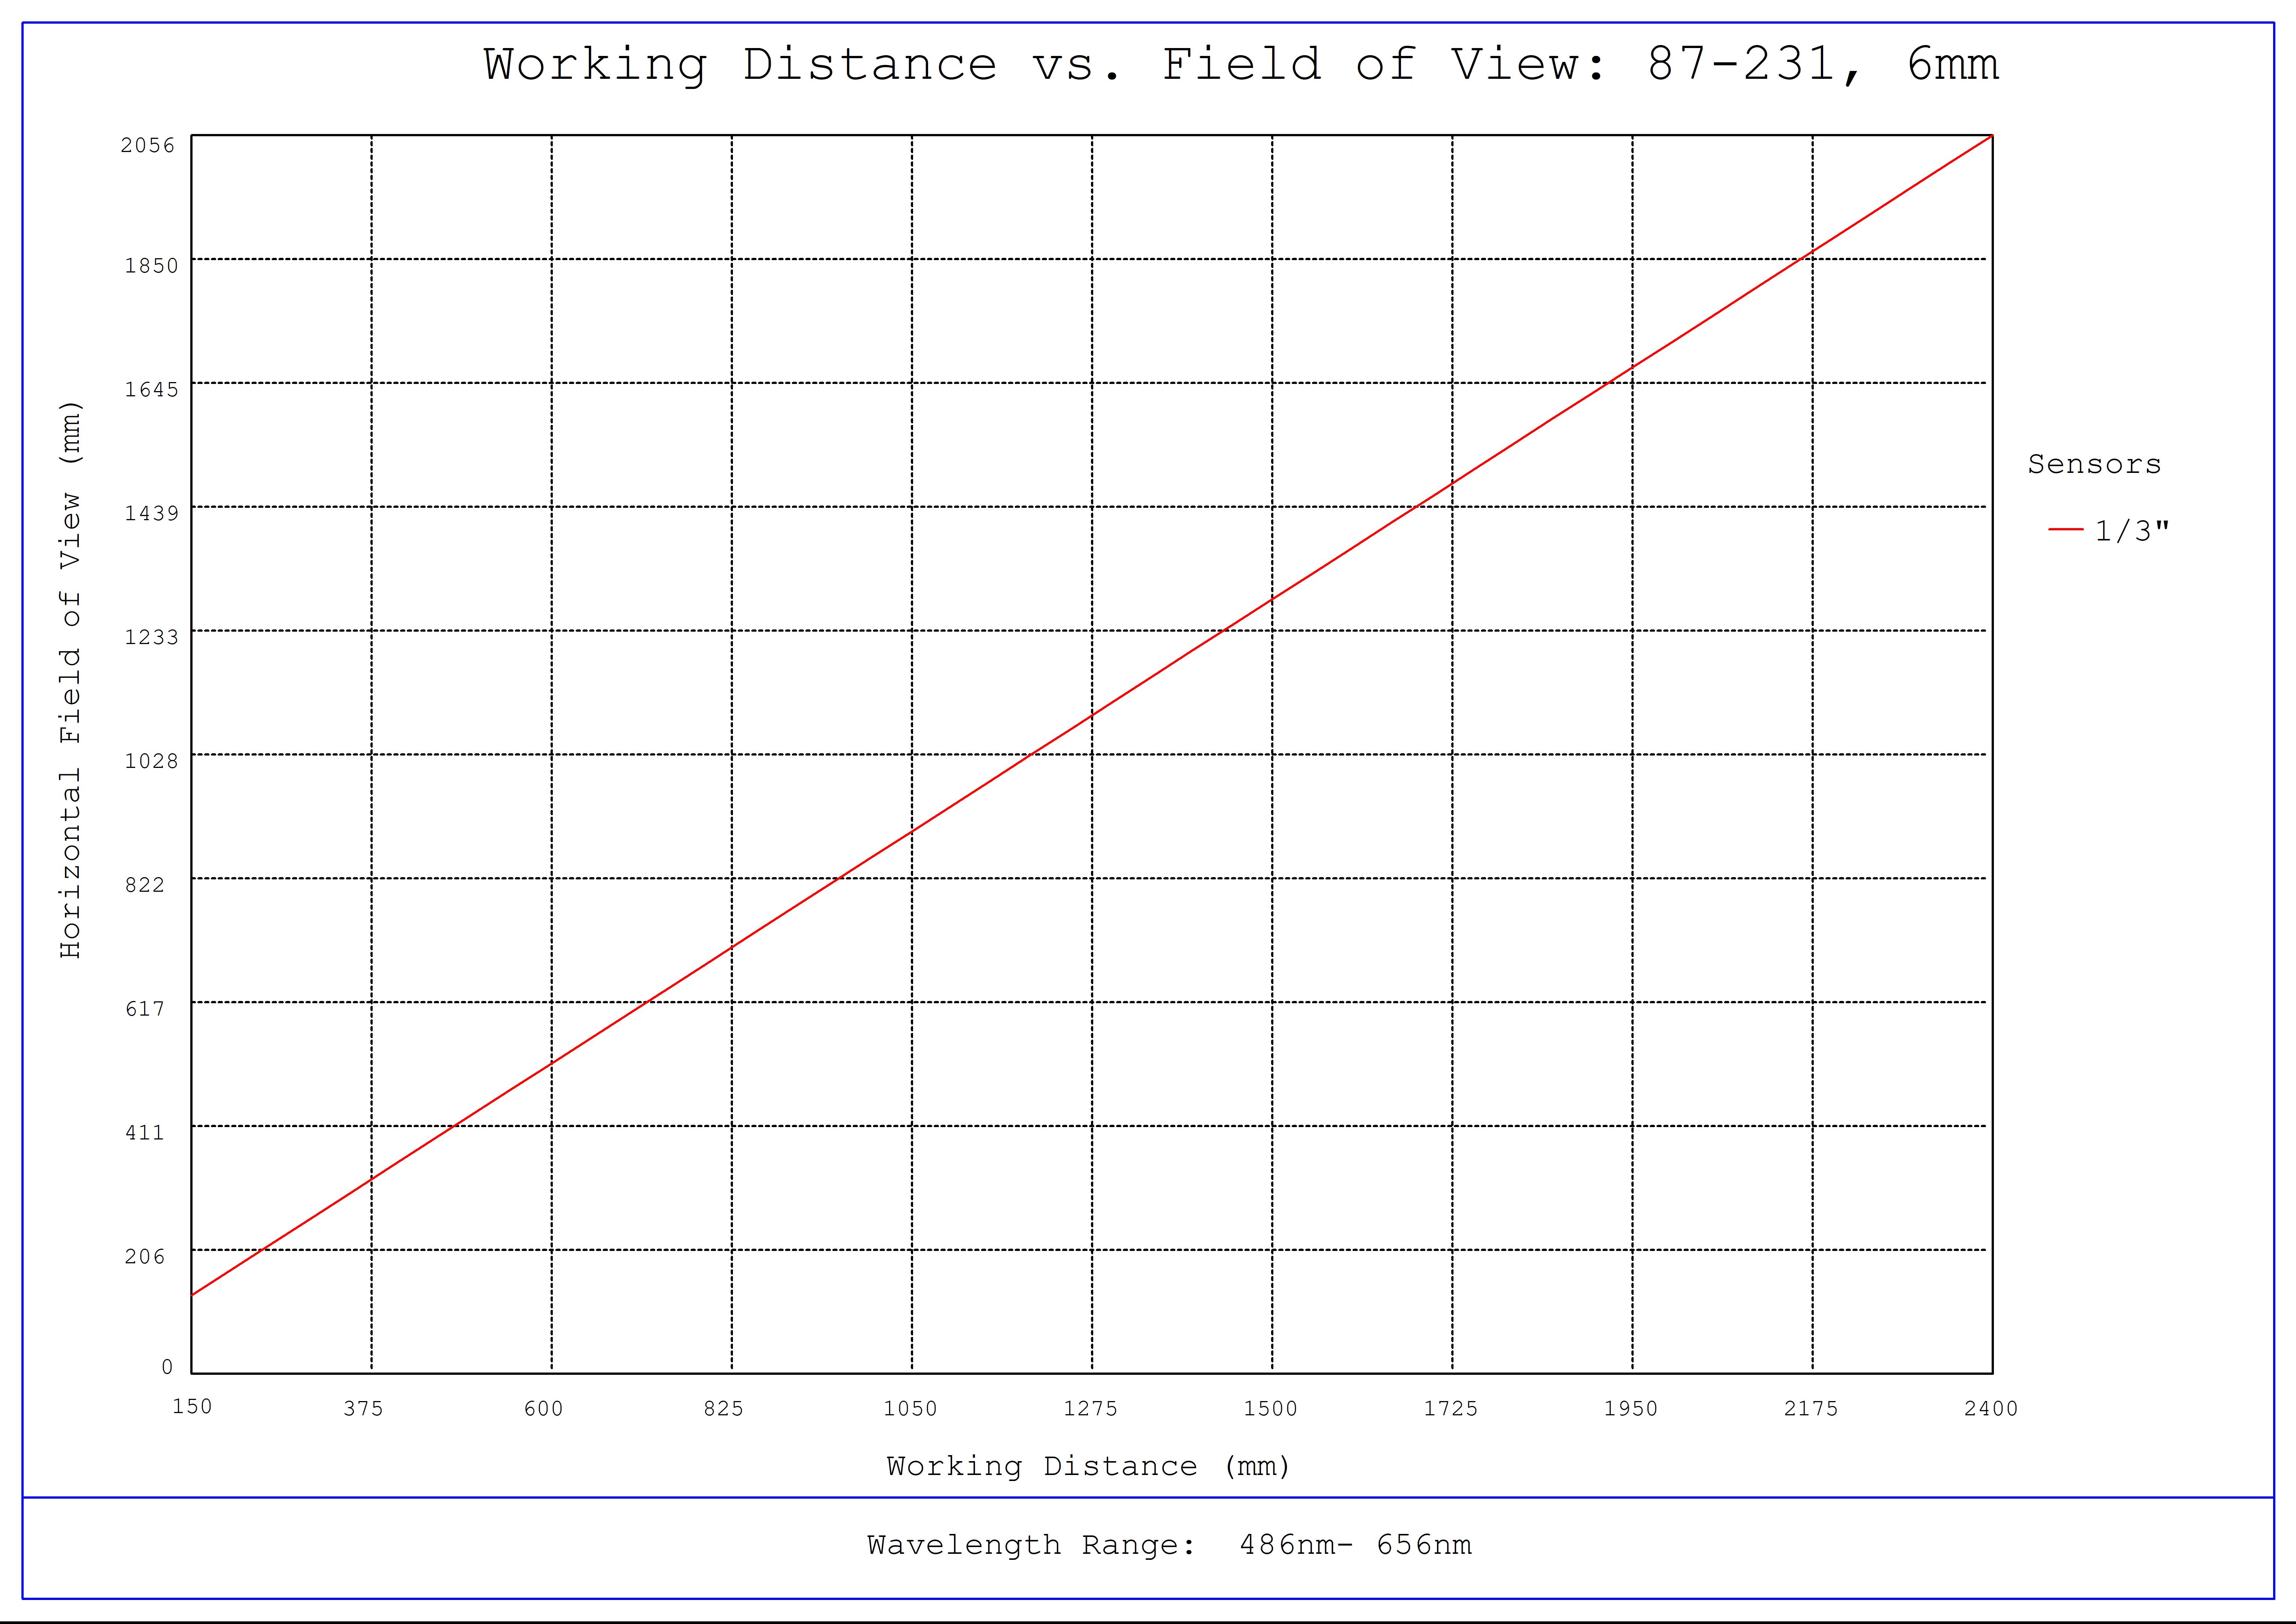 #87-231, f/1.9, 6mm Focal Length Green Series M12 Lens, Working Distance versus Field of View Plot